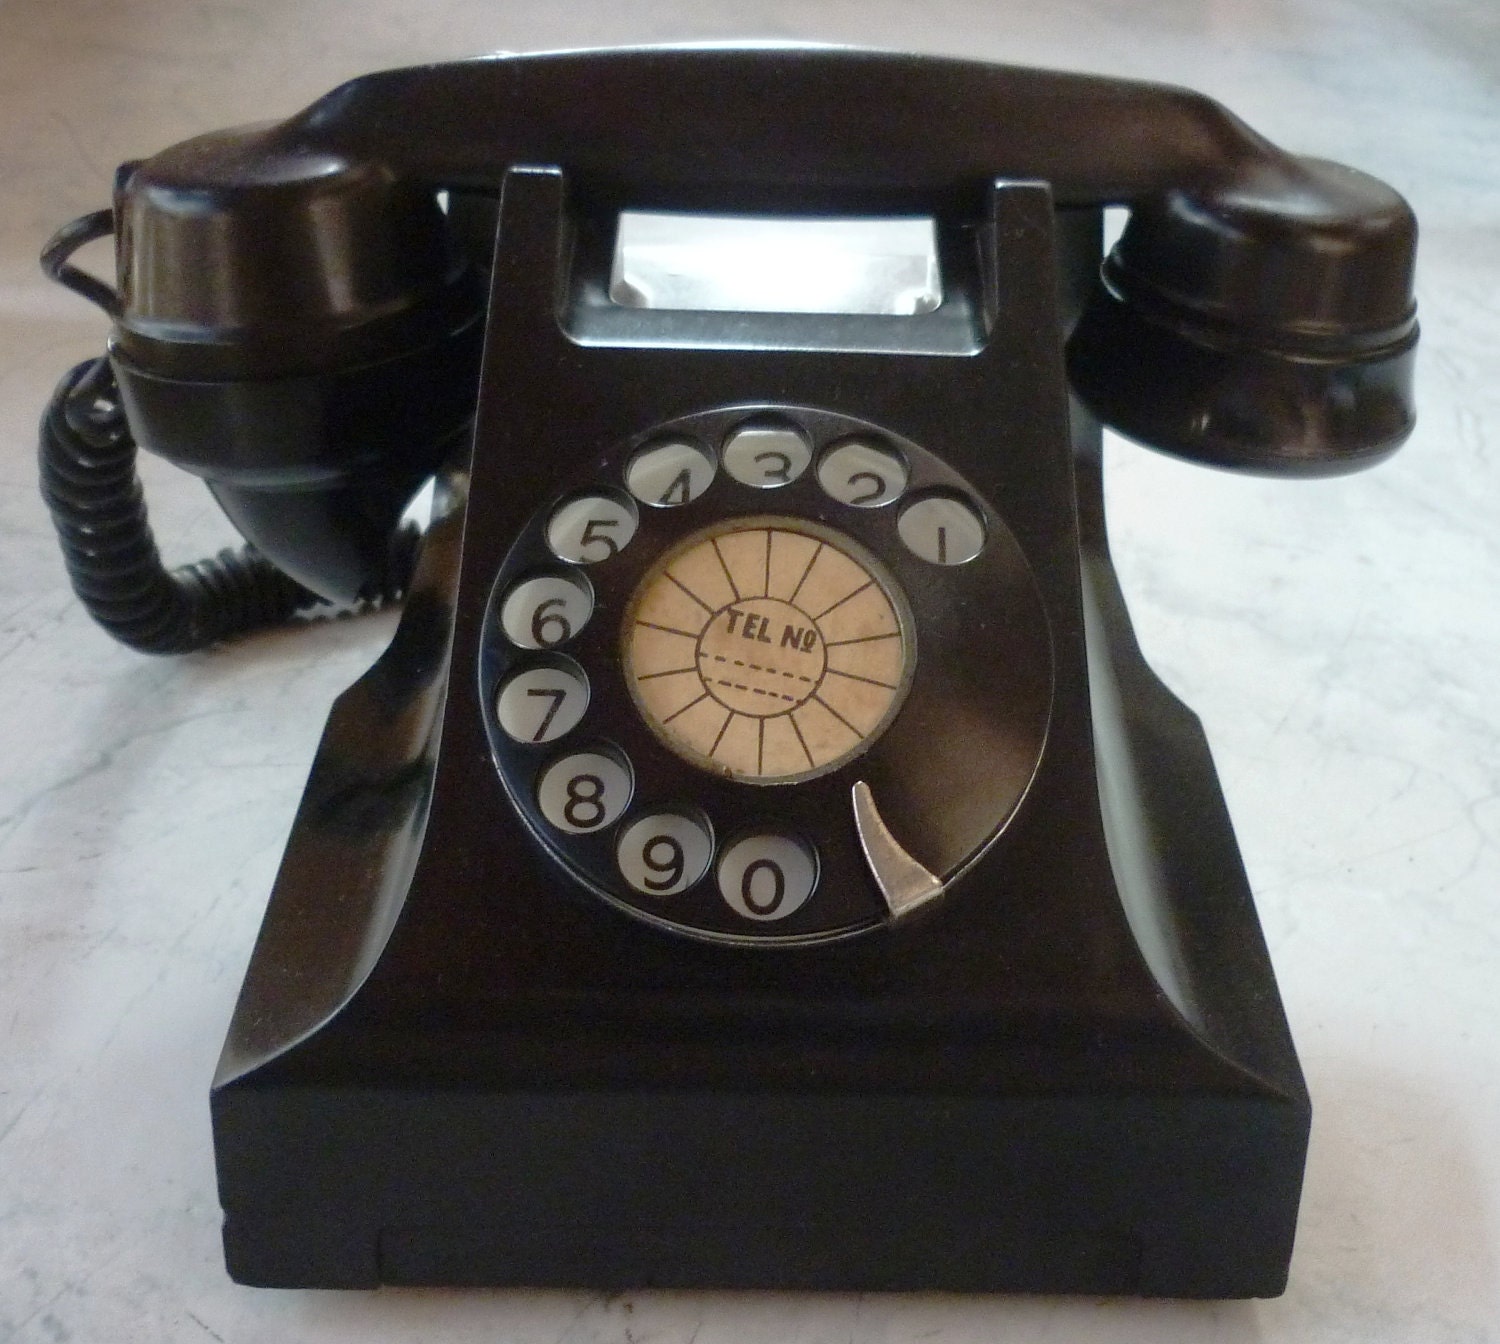 phone 1950